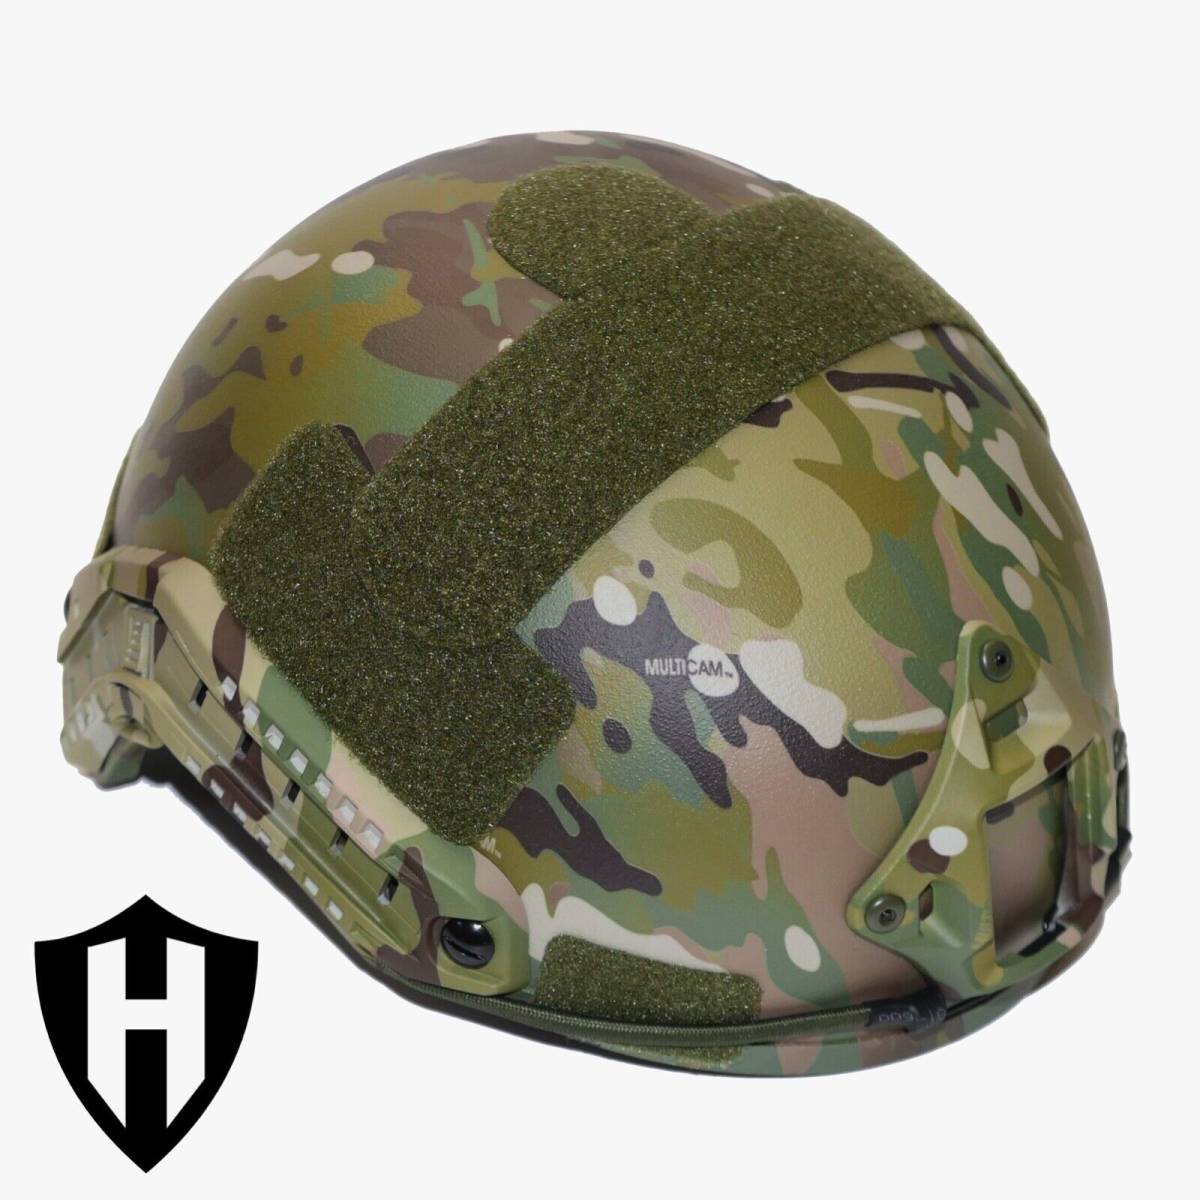 Level IIIA ballistic helmet, made with Kevlar - improved straps & padding - vid 海外 即決